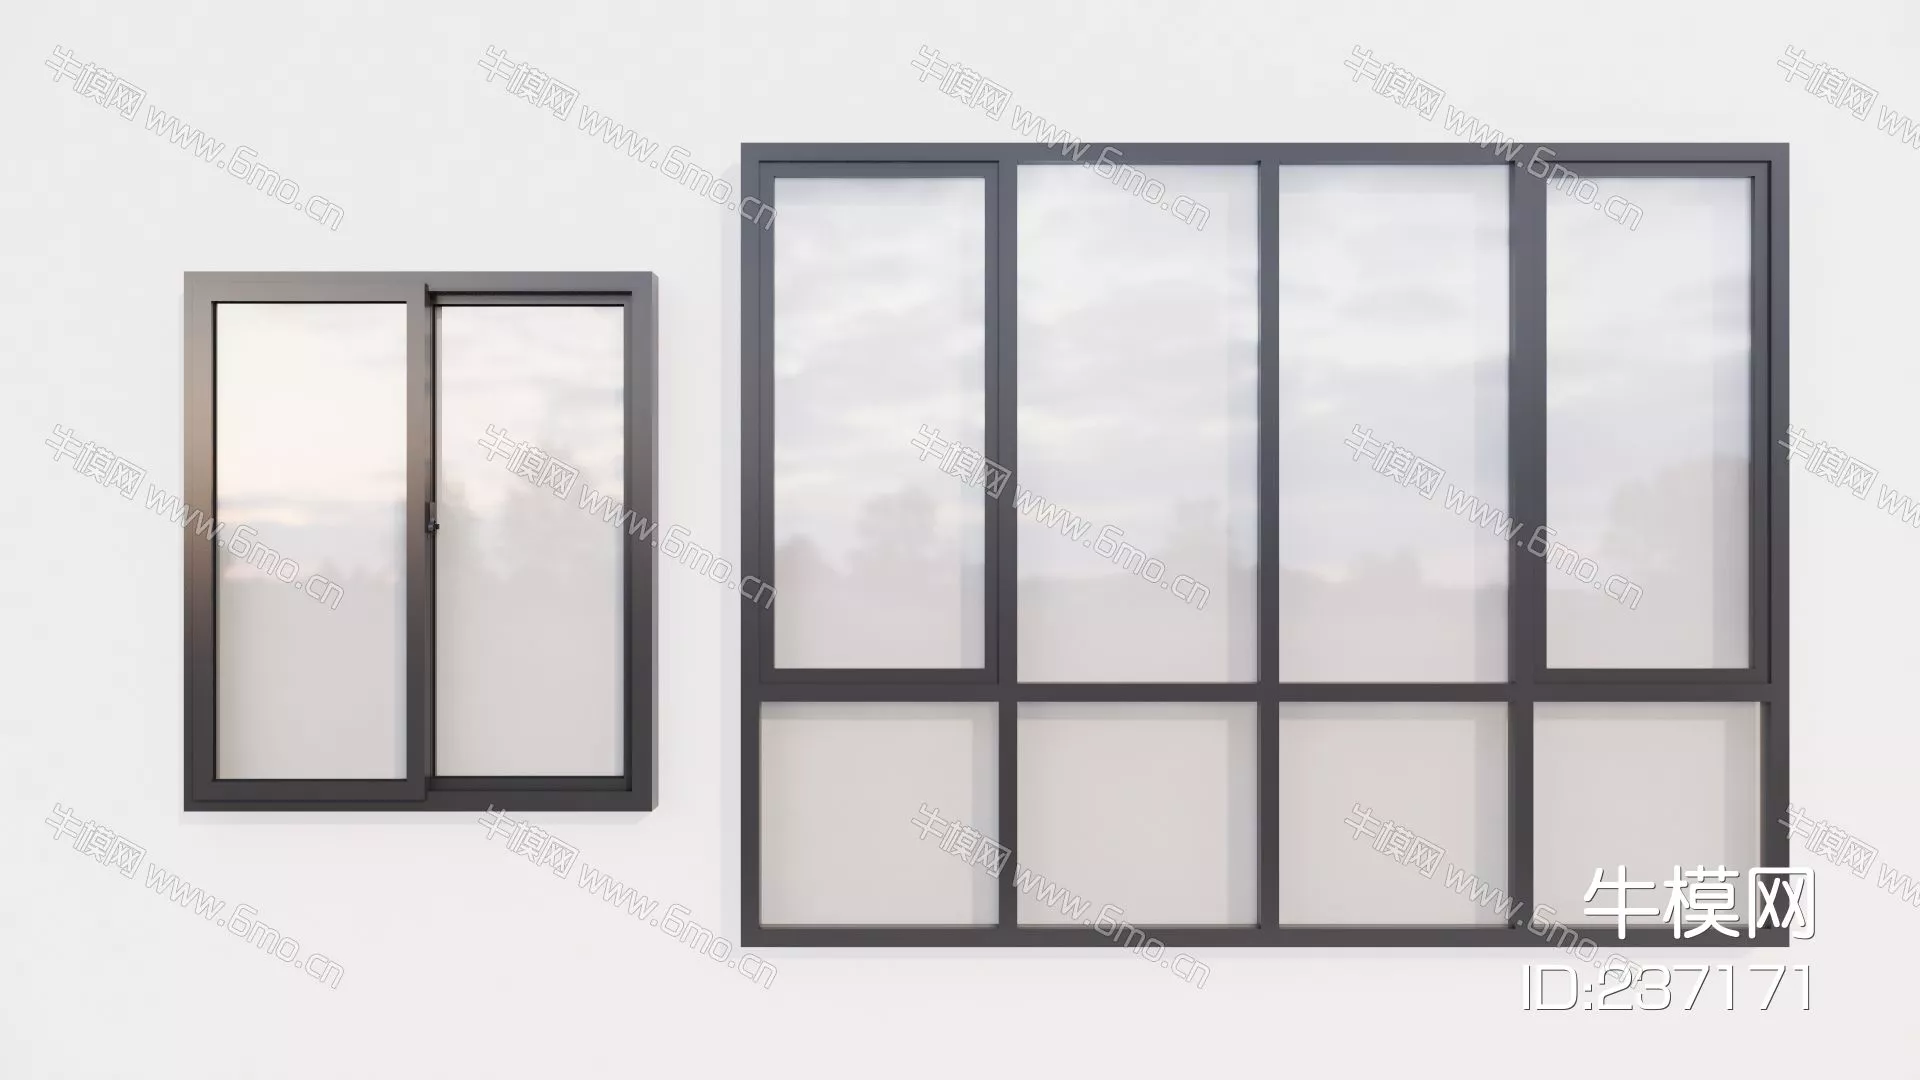 MODERN DOOR AND WINDOWS - SKETCHUP 3D MODEL - ENSCAPE - 237171